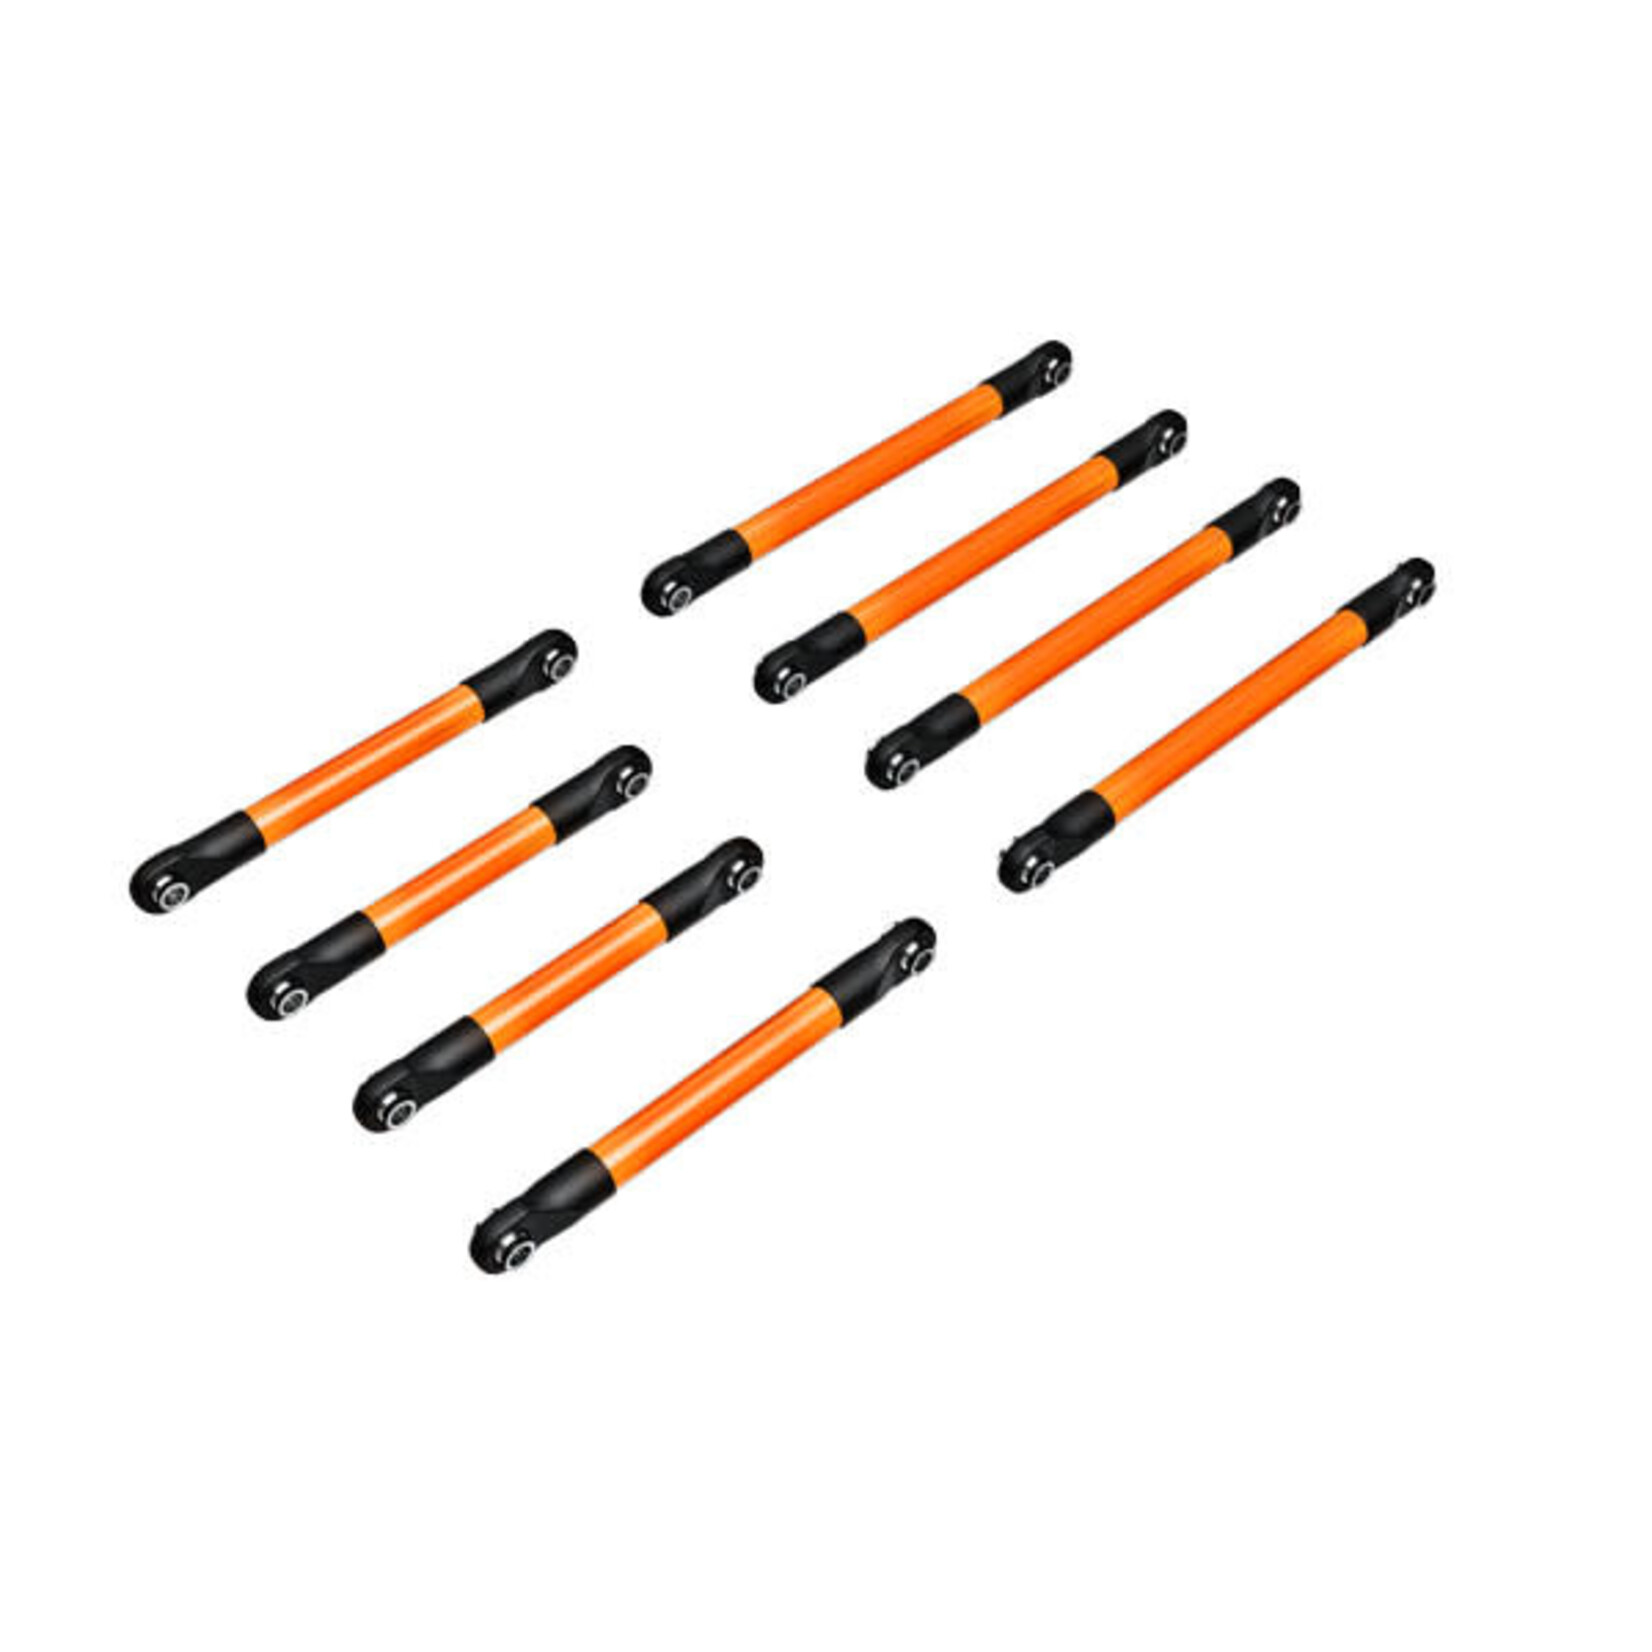 Traxxas Traxxas TRX-4M Aluminum Suspension Link Set (Orange) (8) #9749-ORNG